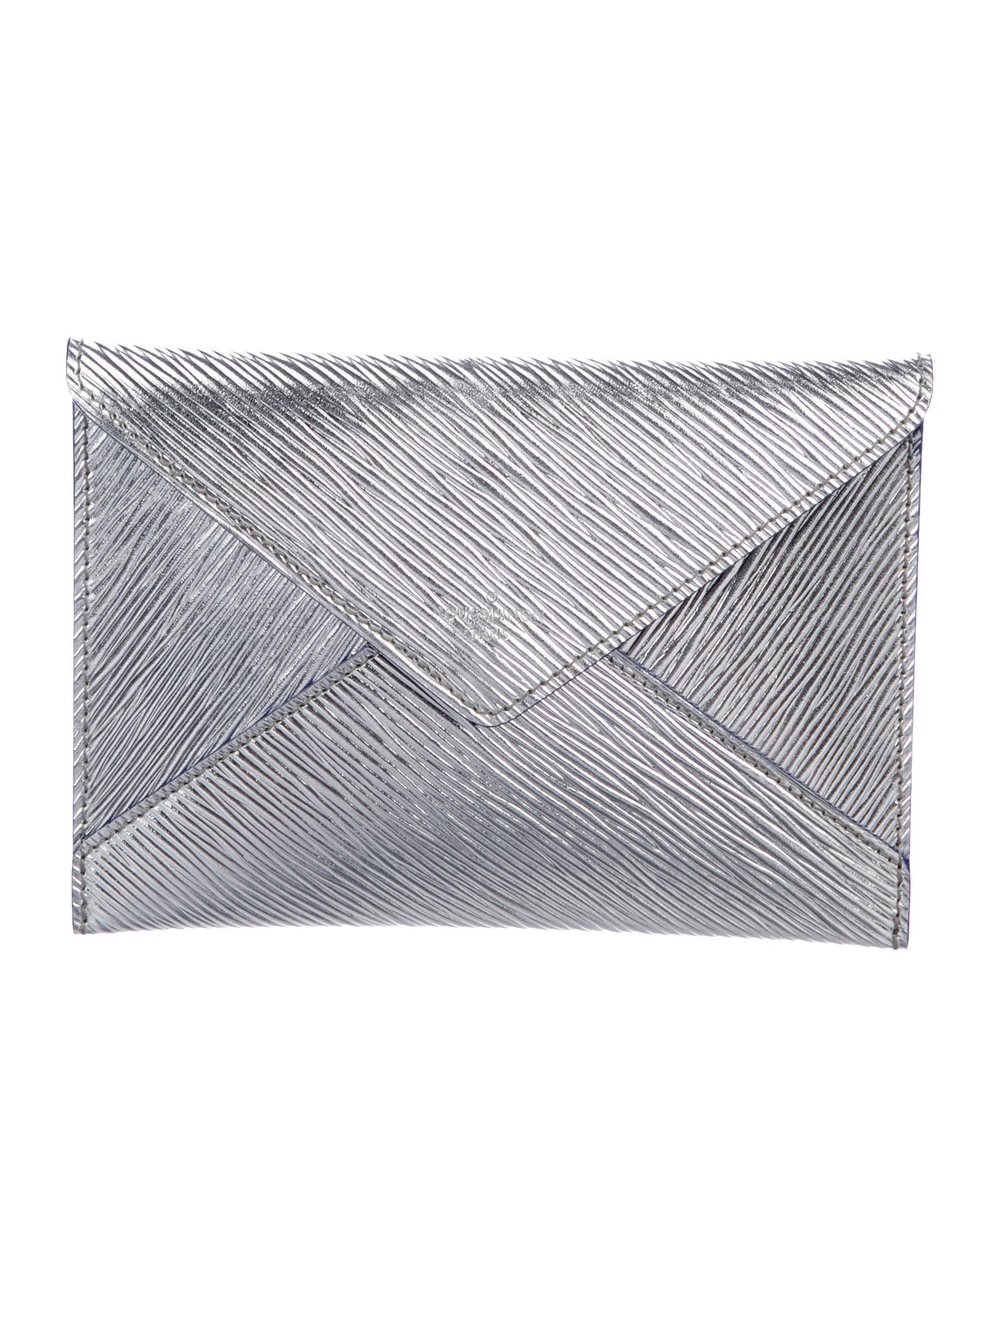 Louis Vuitton Silver Epi Envelope Clutch — The Posh Pop-Up